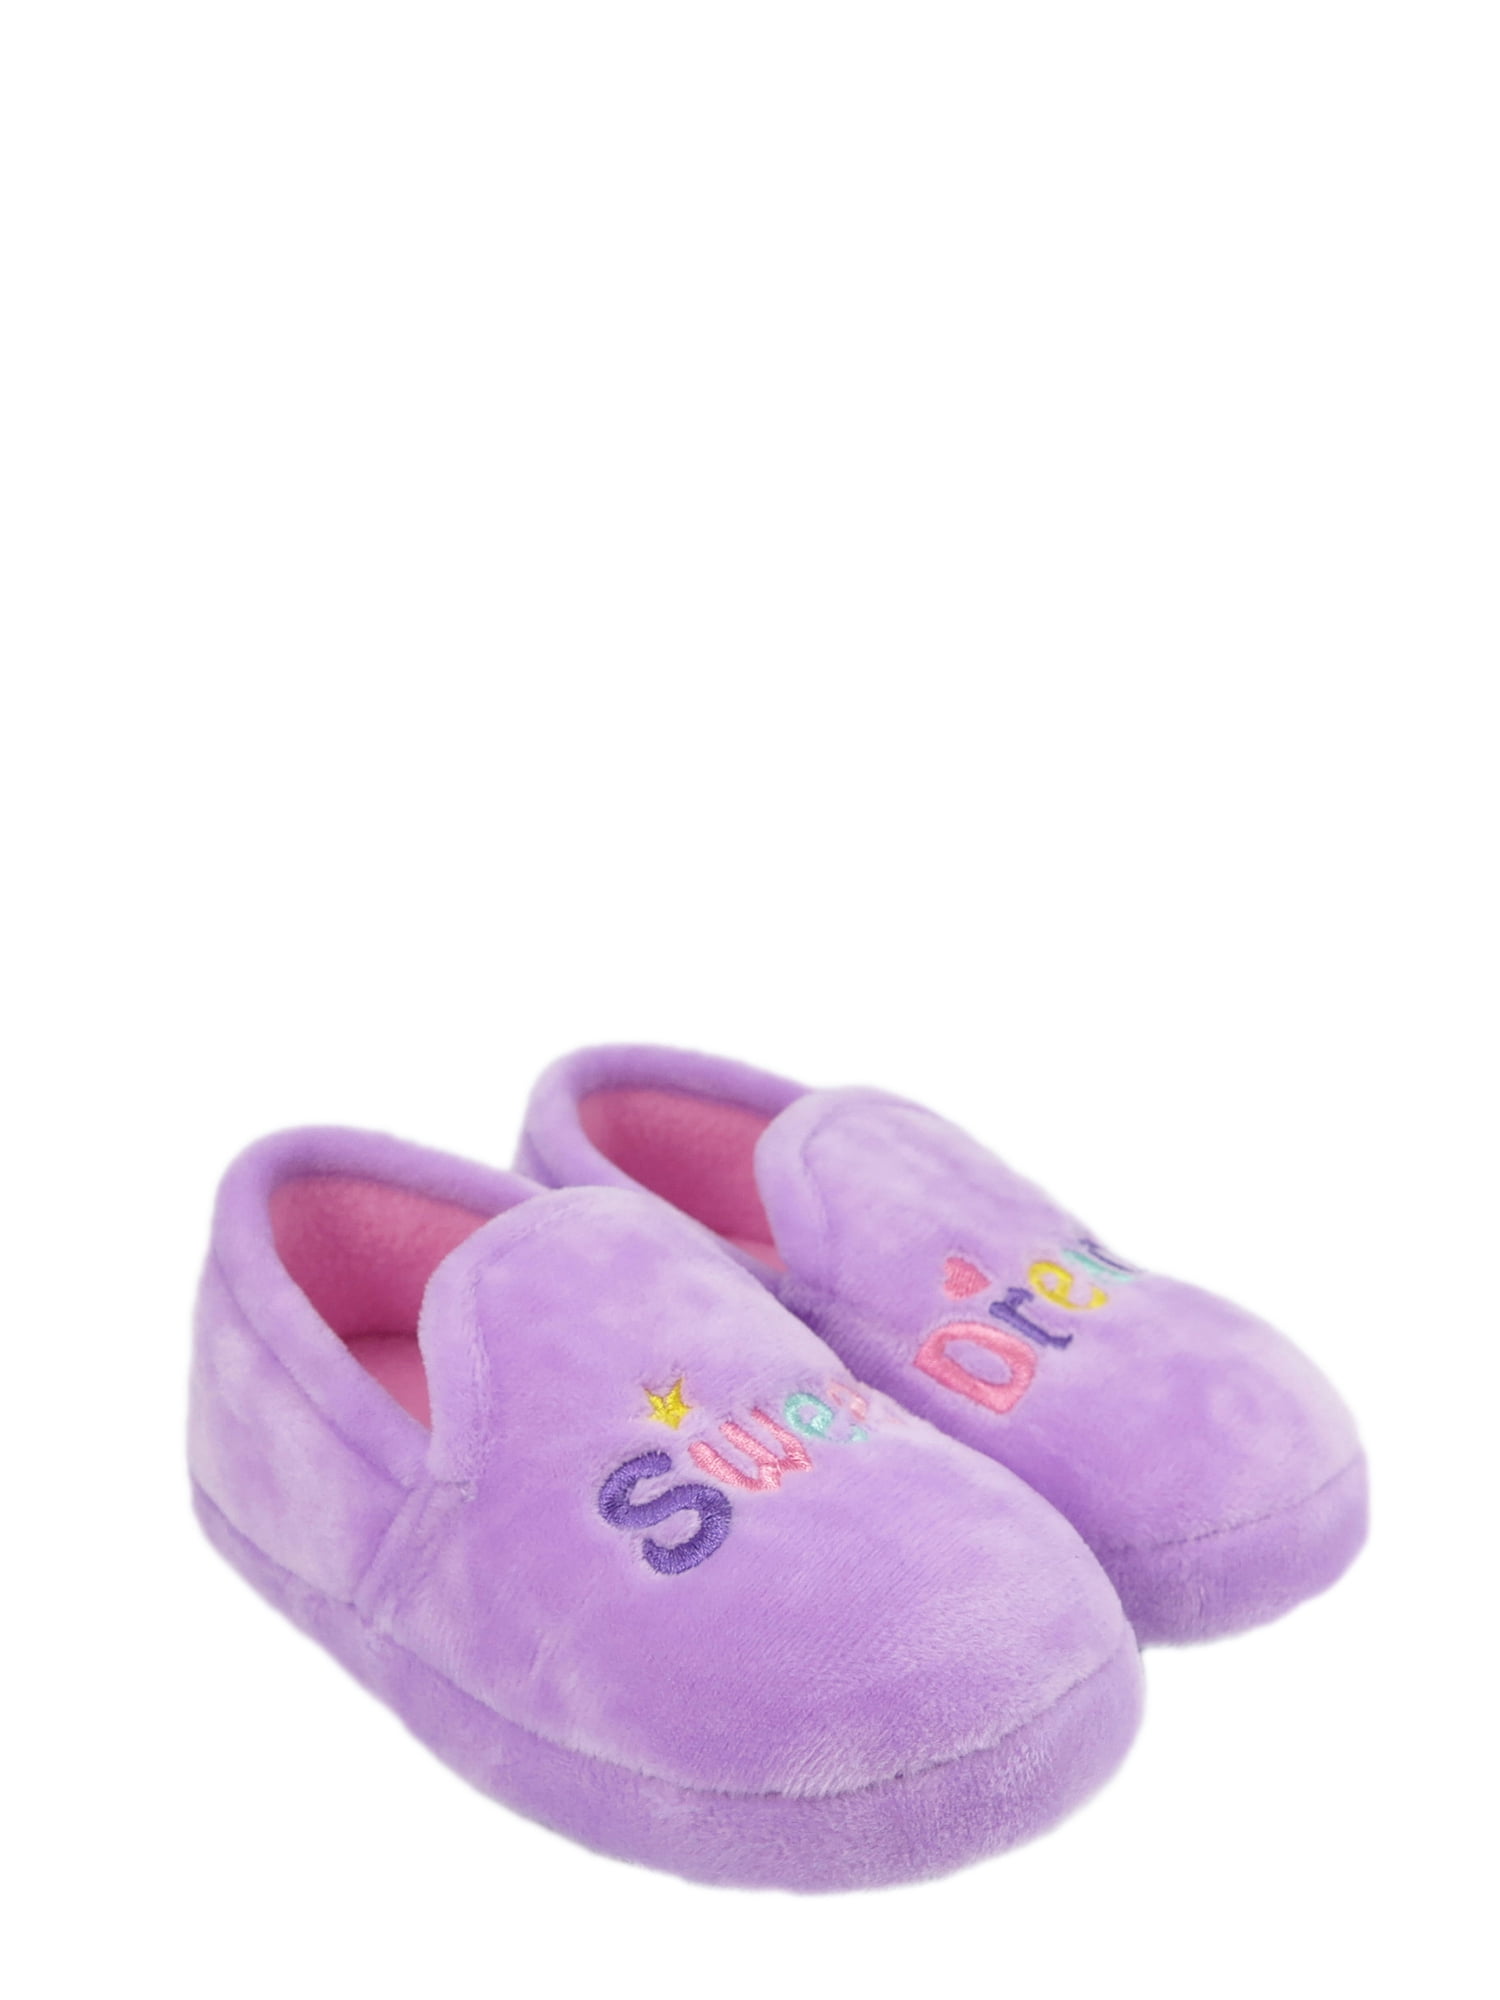 diabetic slippers walmart